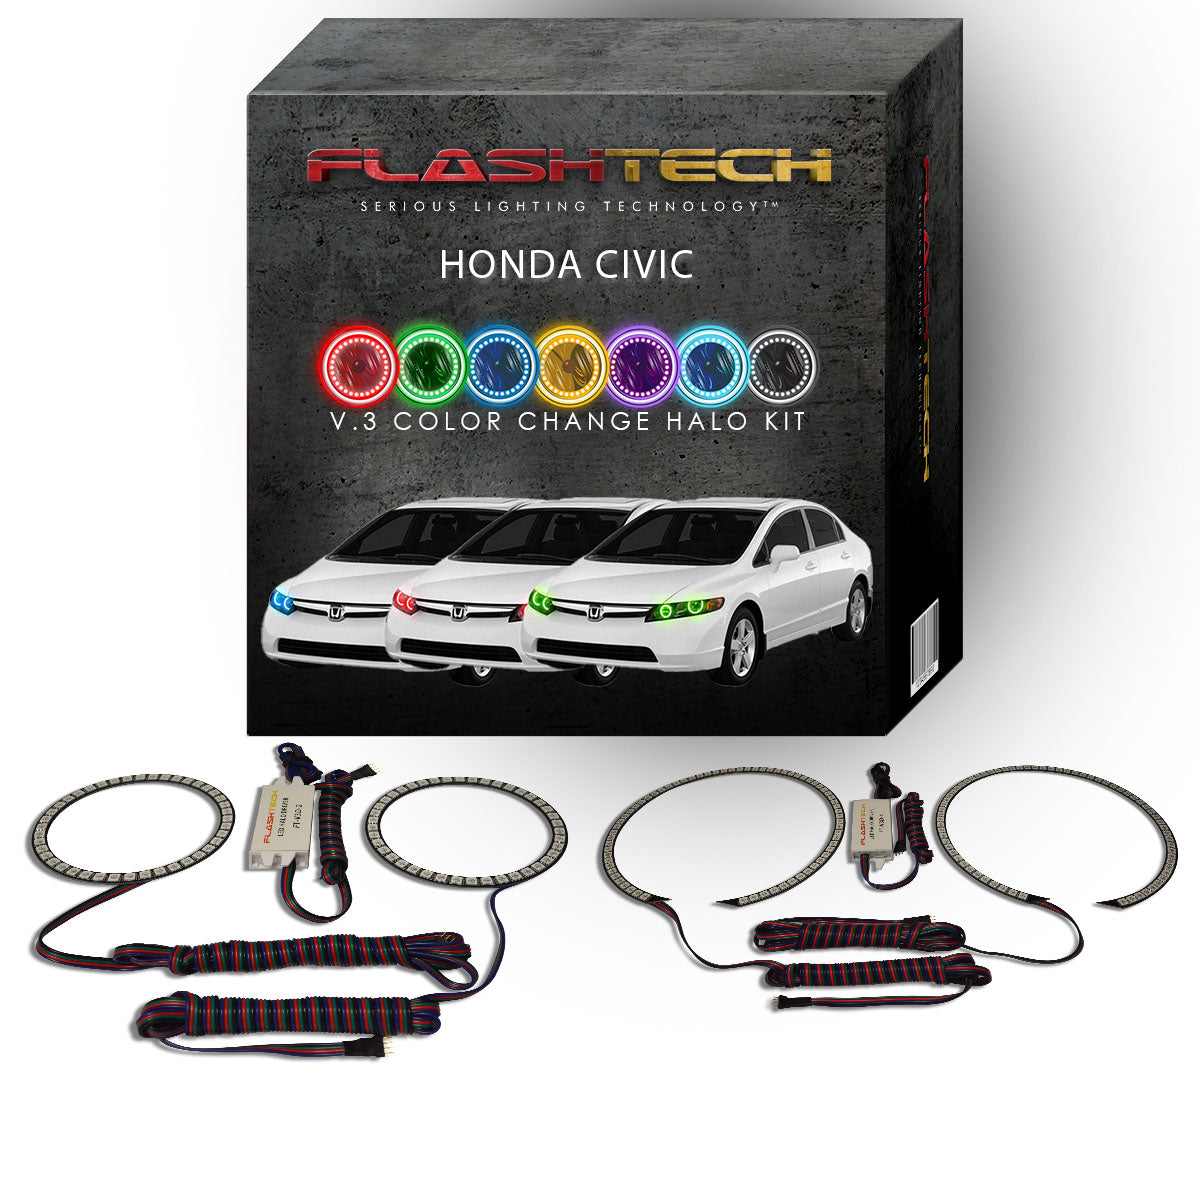 Honda-Civic-2006, 2007, 2008-LED-Halo-Headlights-RGB-No Remote-HO-CVS0608-V3H